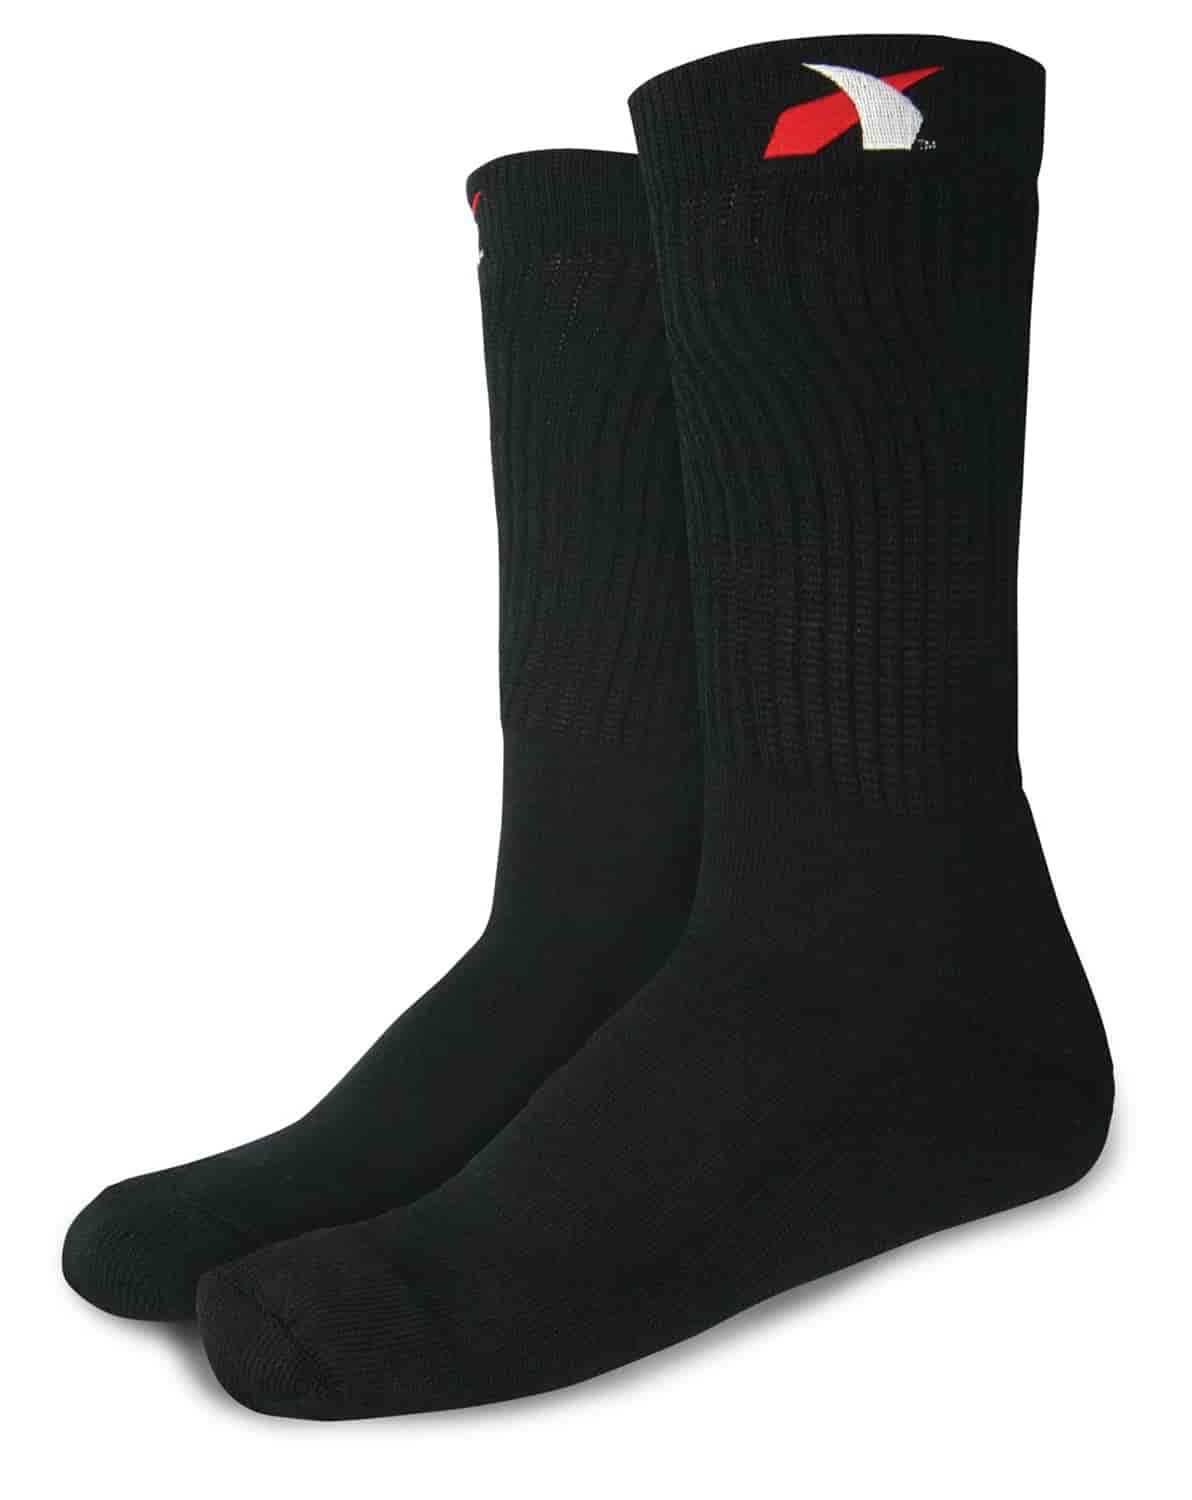 Underwear - Socks SFI3.3 Medium, Black